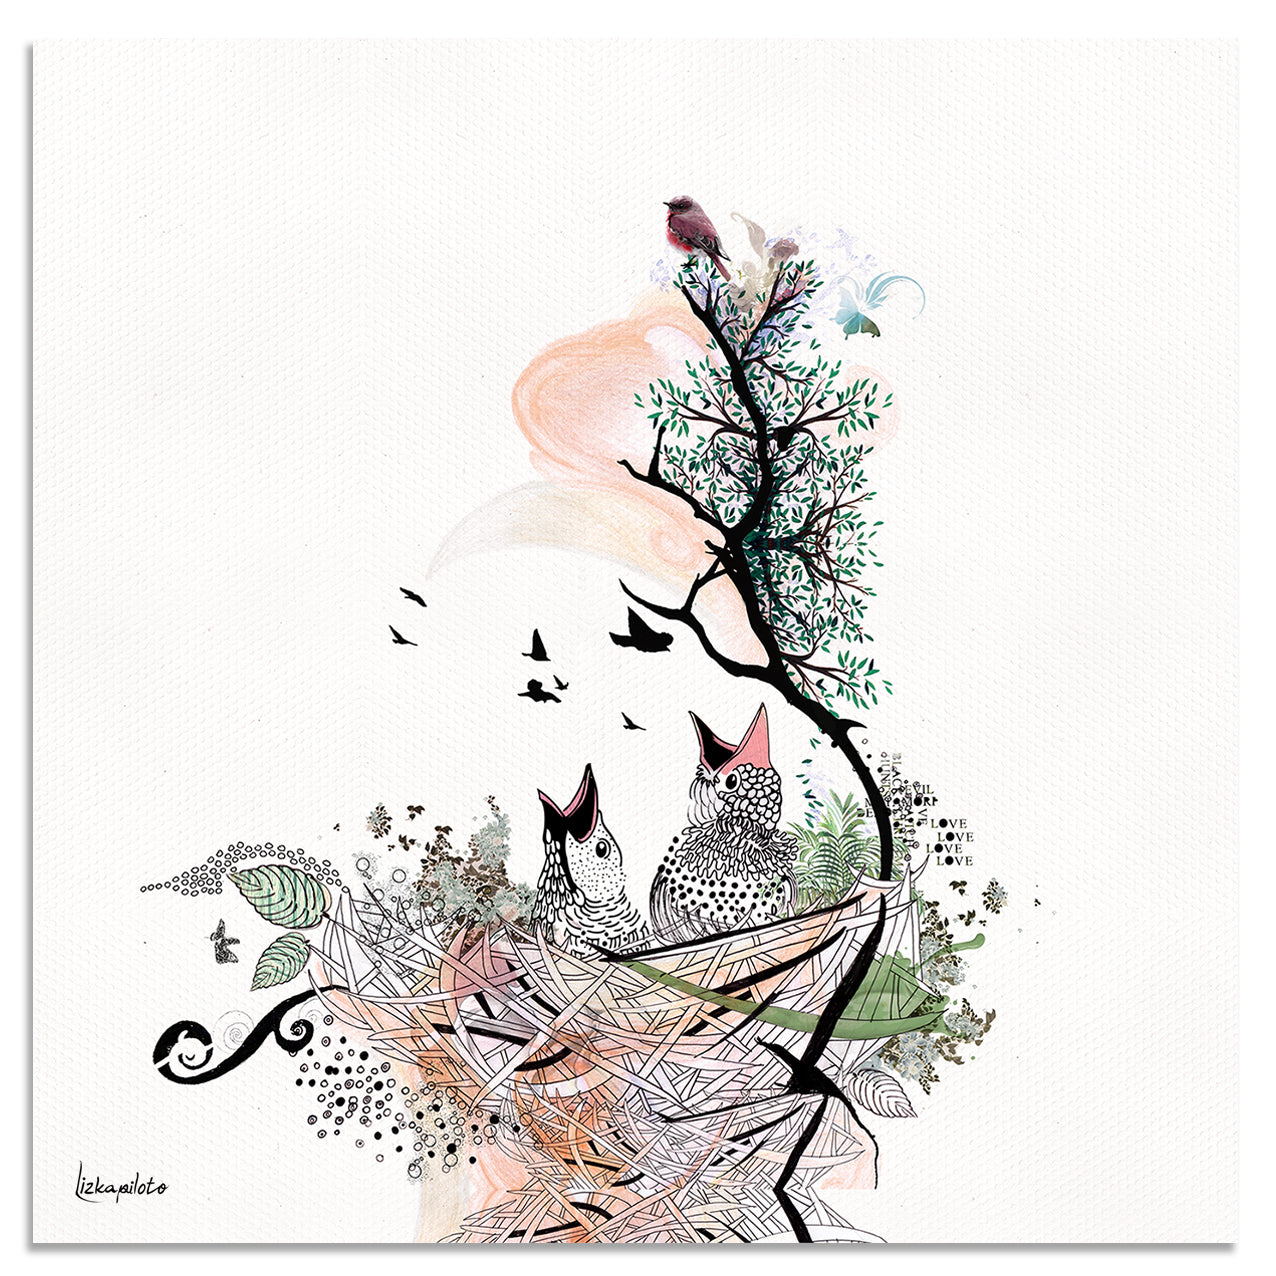 bird artwork of baby birds in nest - Liz Kapiloto Art & Design